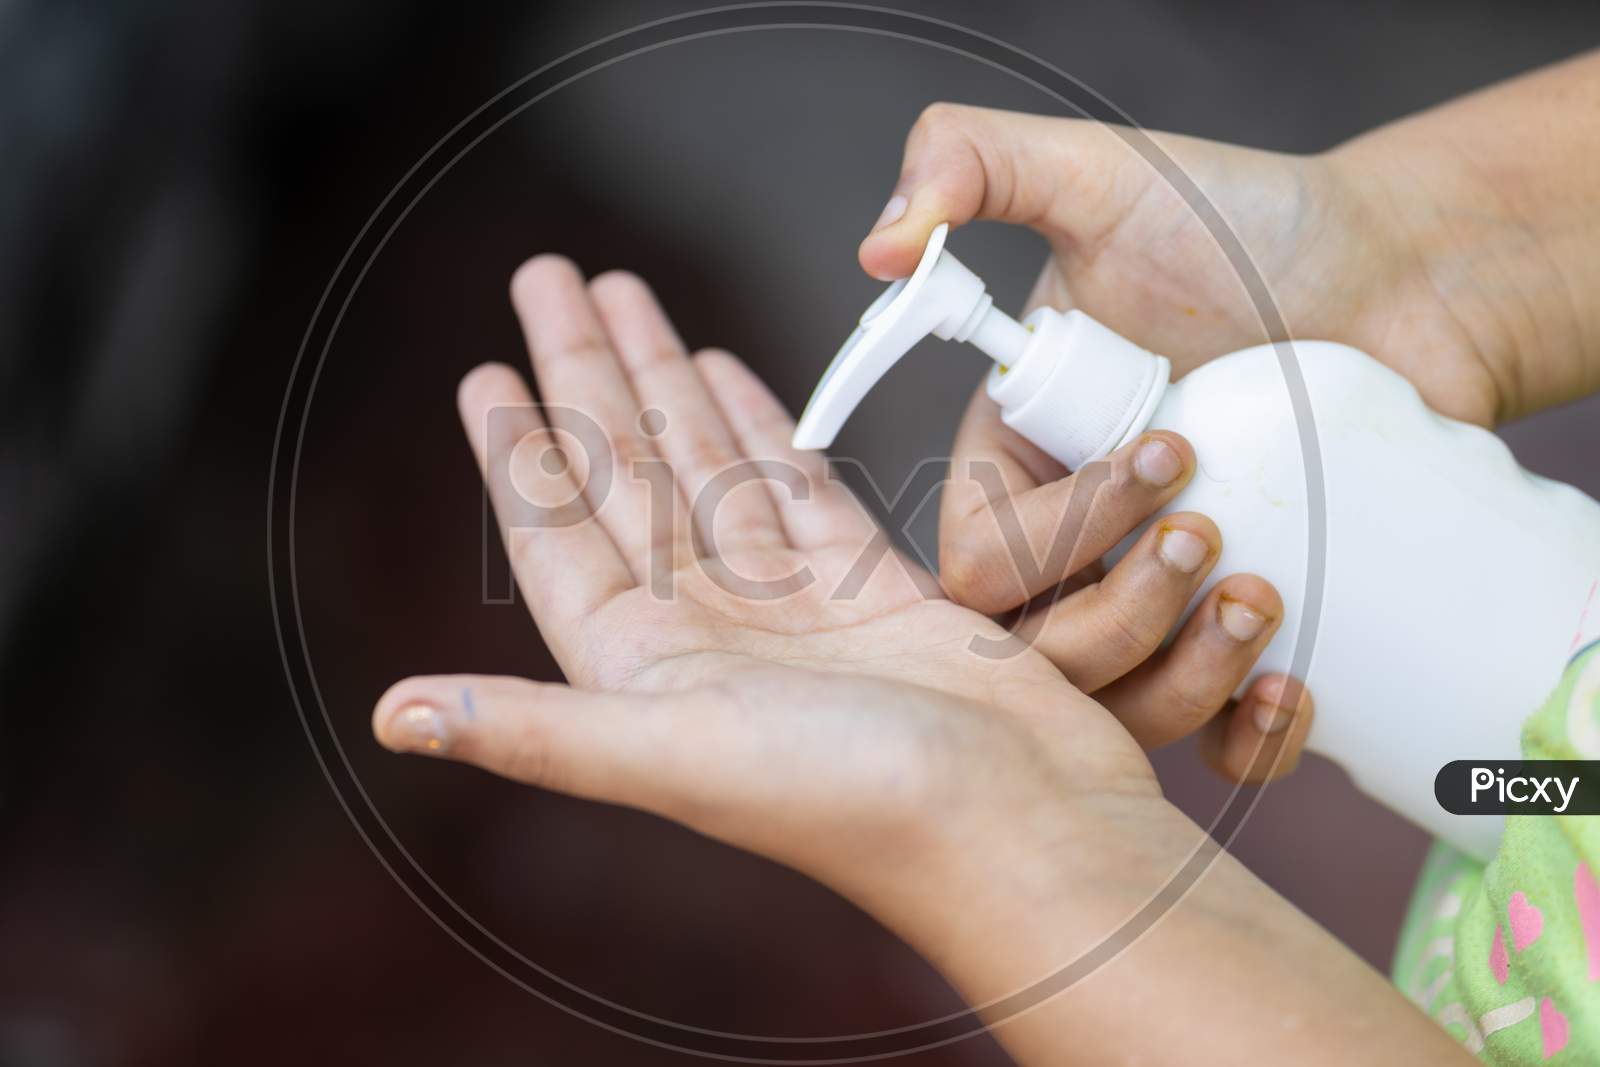 Child'S Hand Holding Sanitizer Bottle